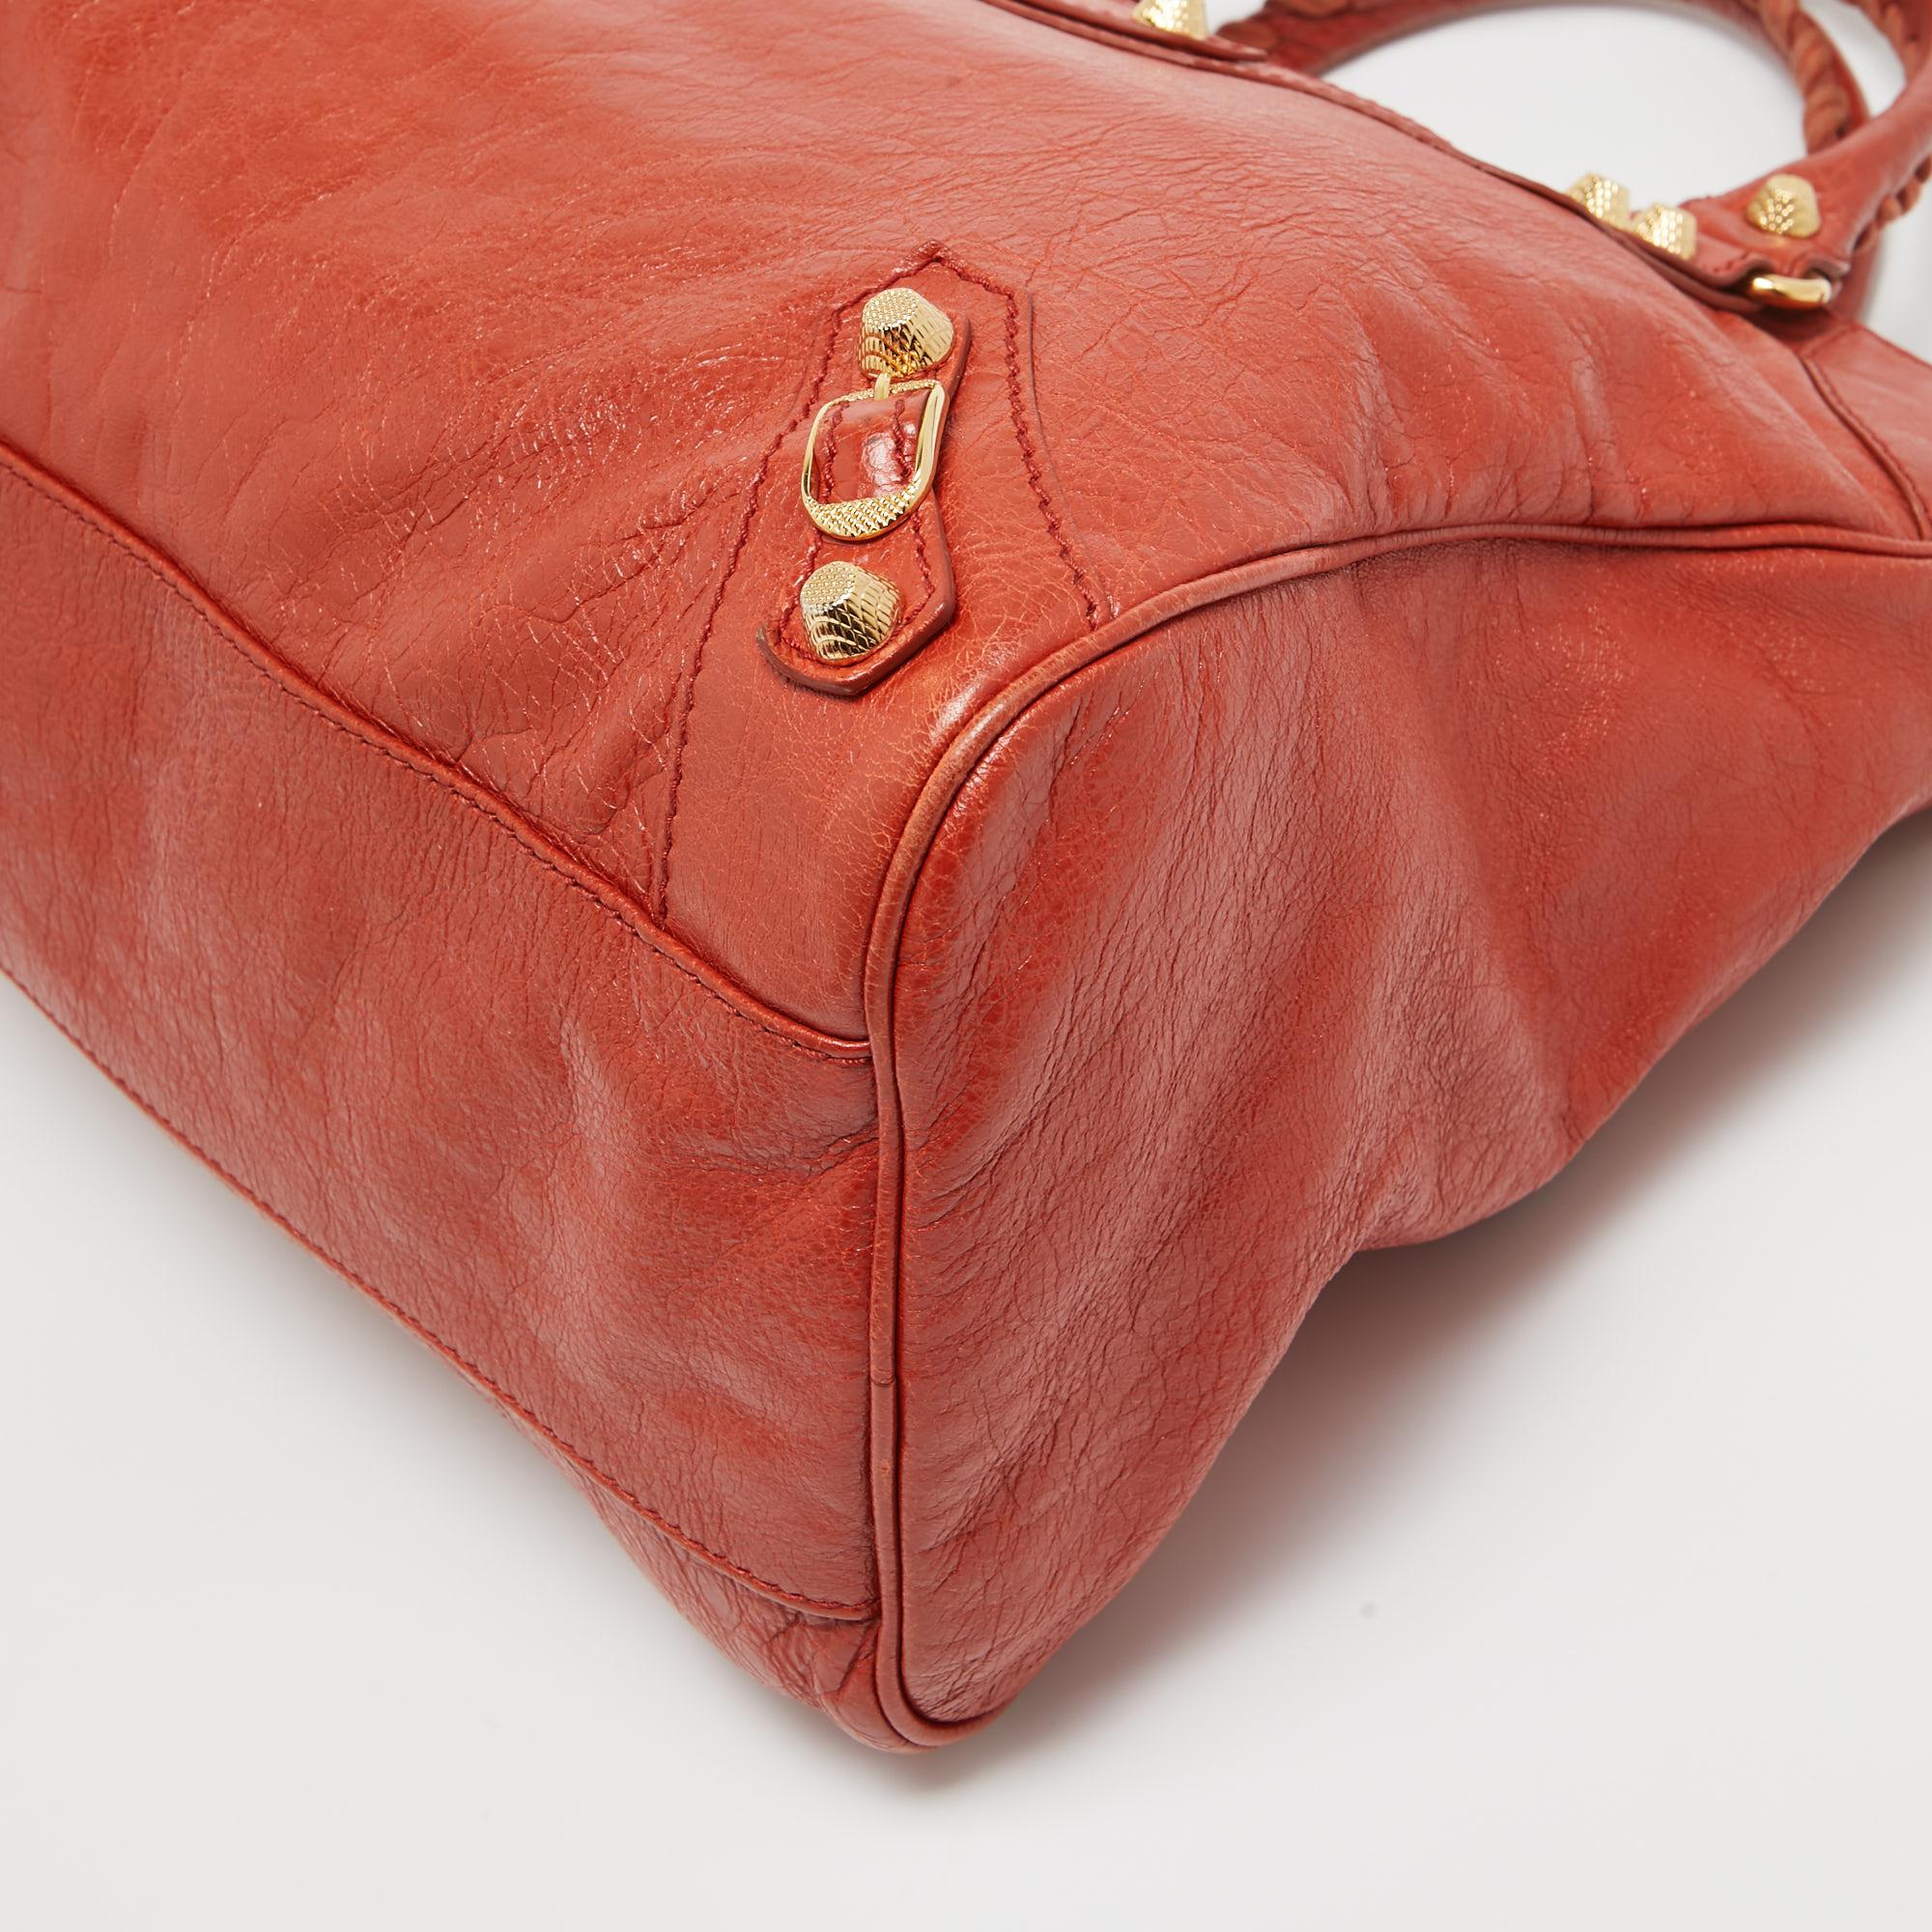 Balenciaga Rust Orange Leather RH Velo Bag For Sale 4